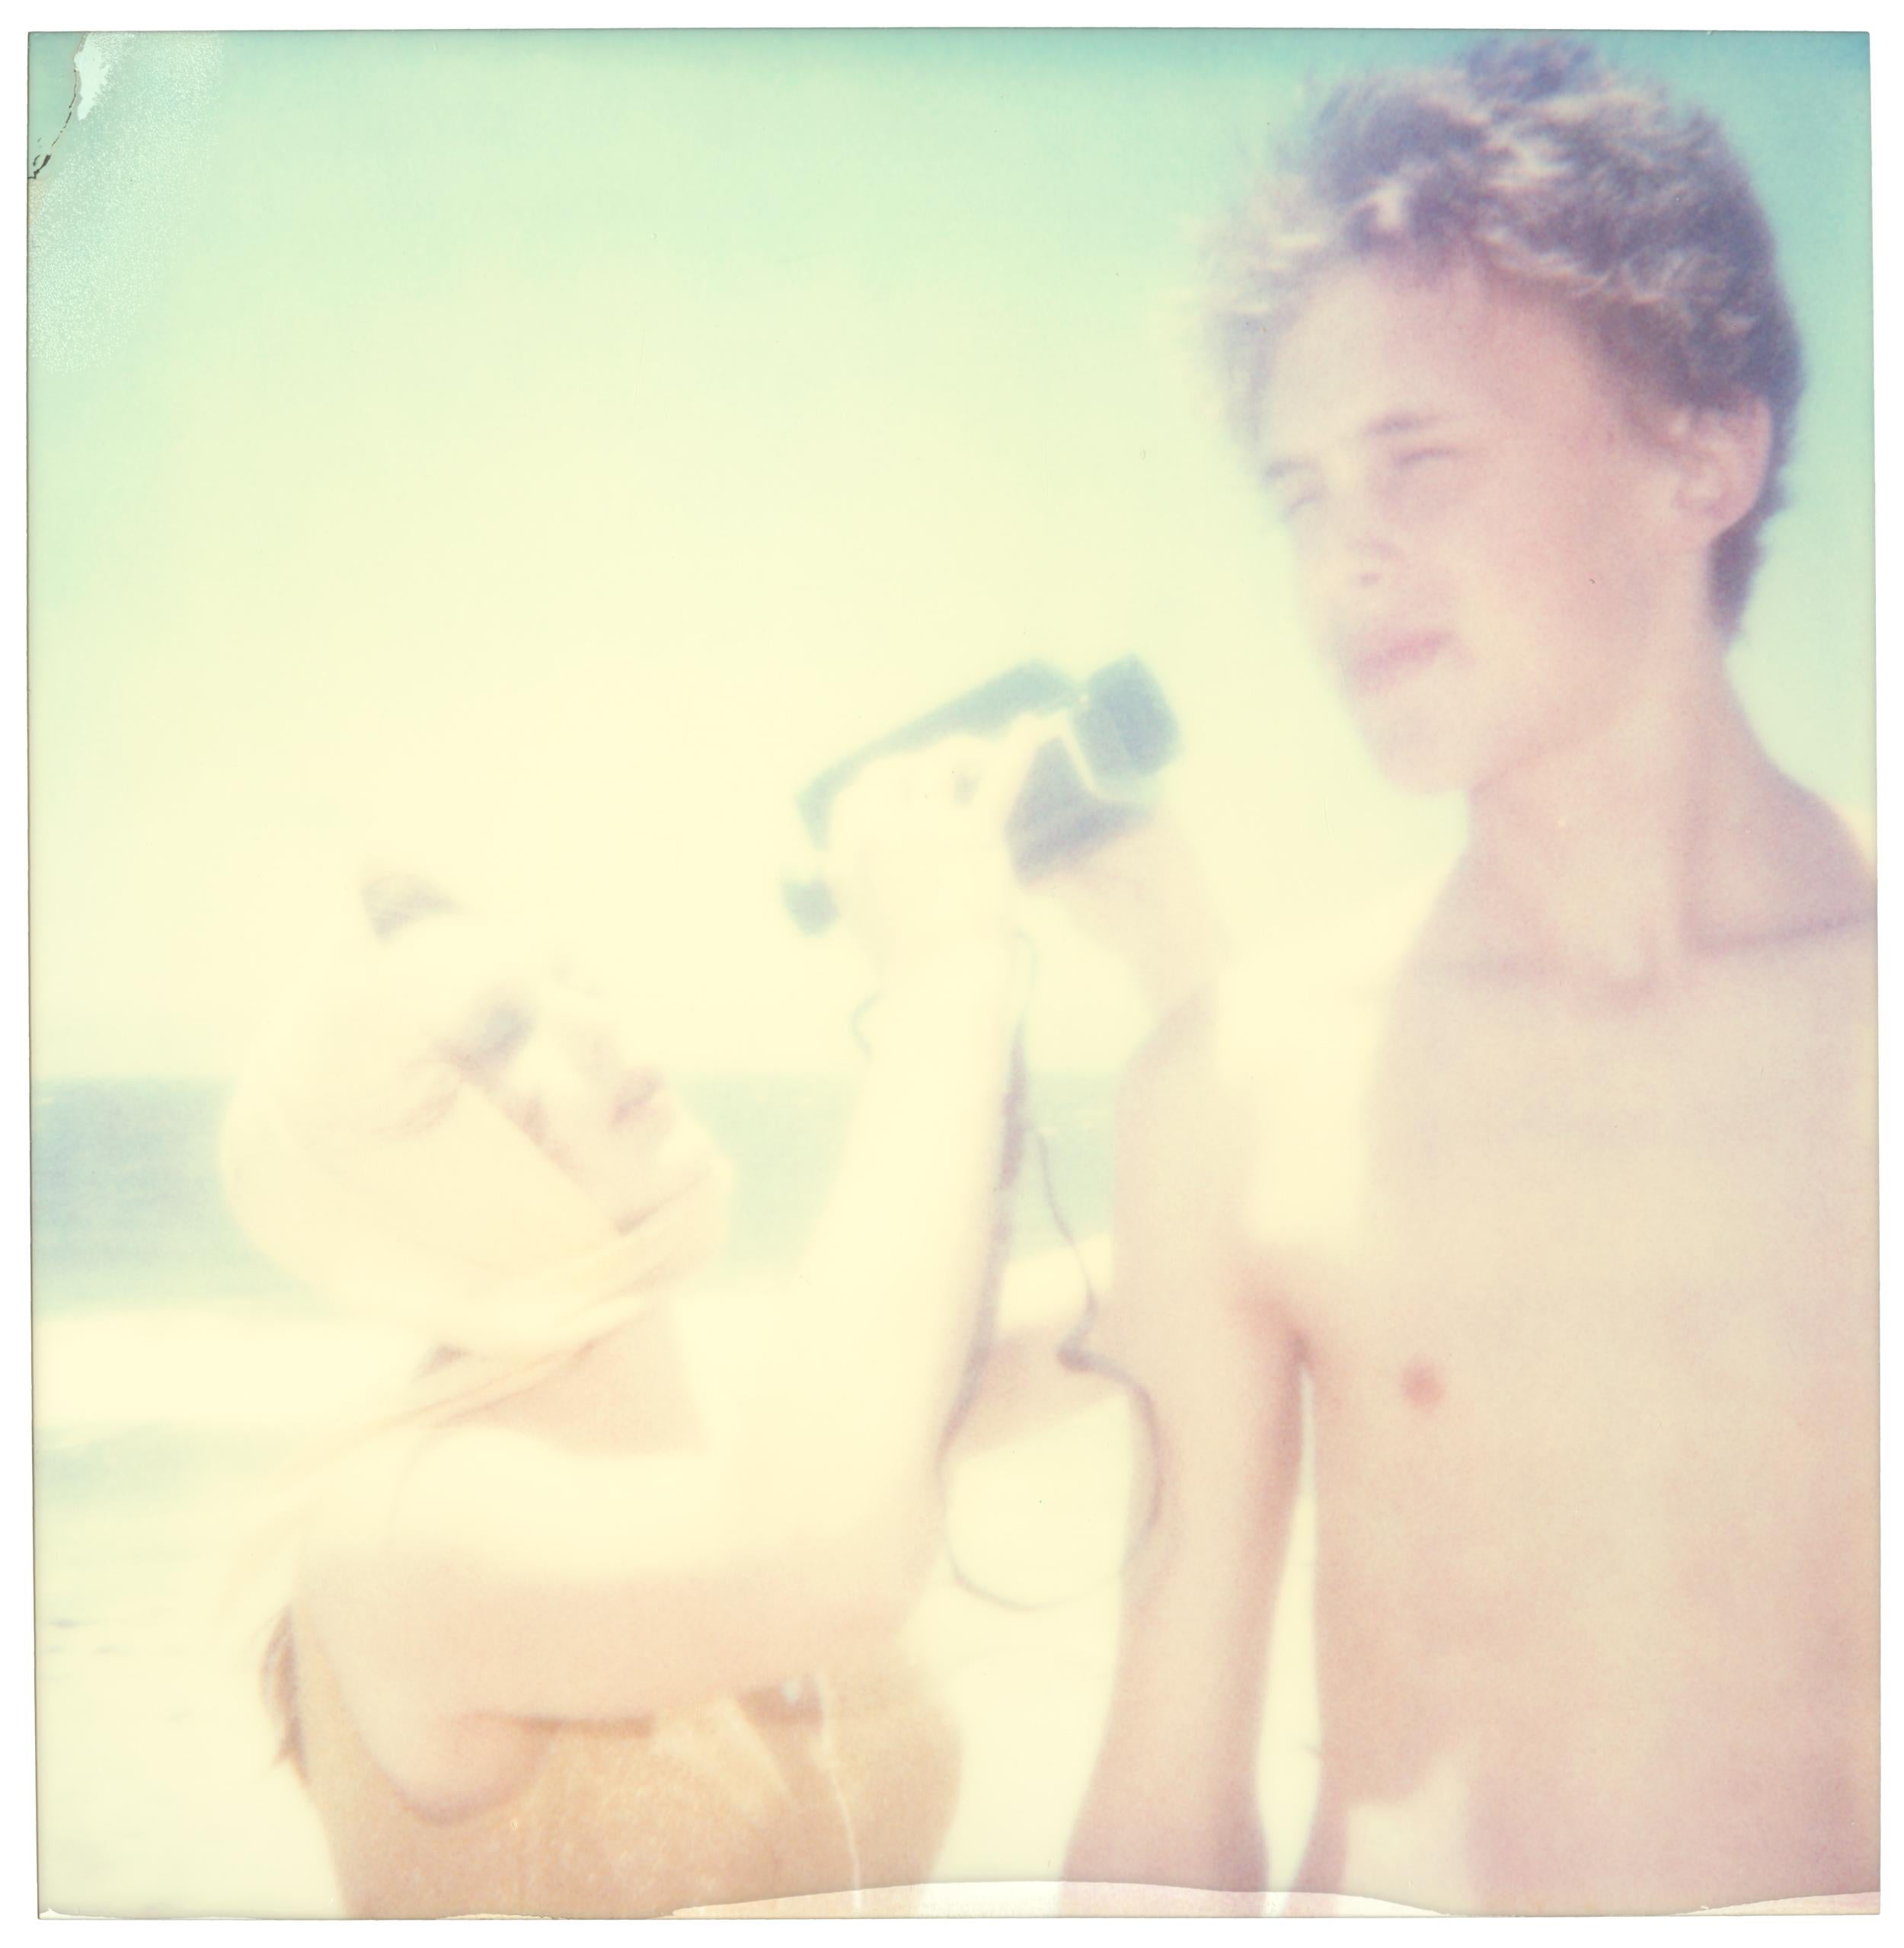 The Diva and the Boy (Beachshoot) - 9 pieces - Polaroid, Vintage, Contemporary 2